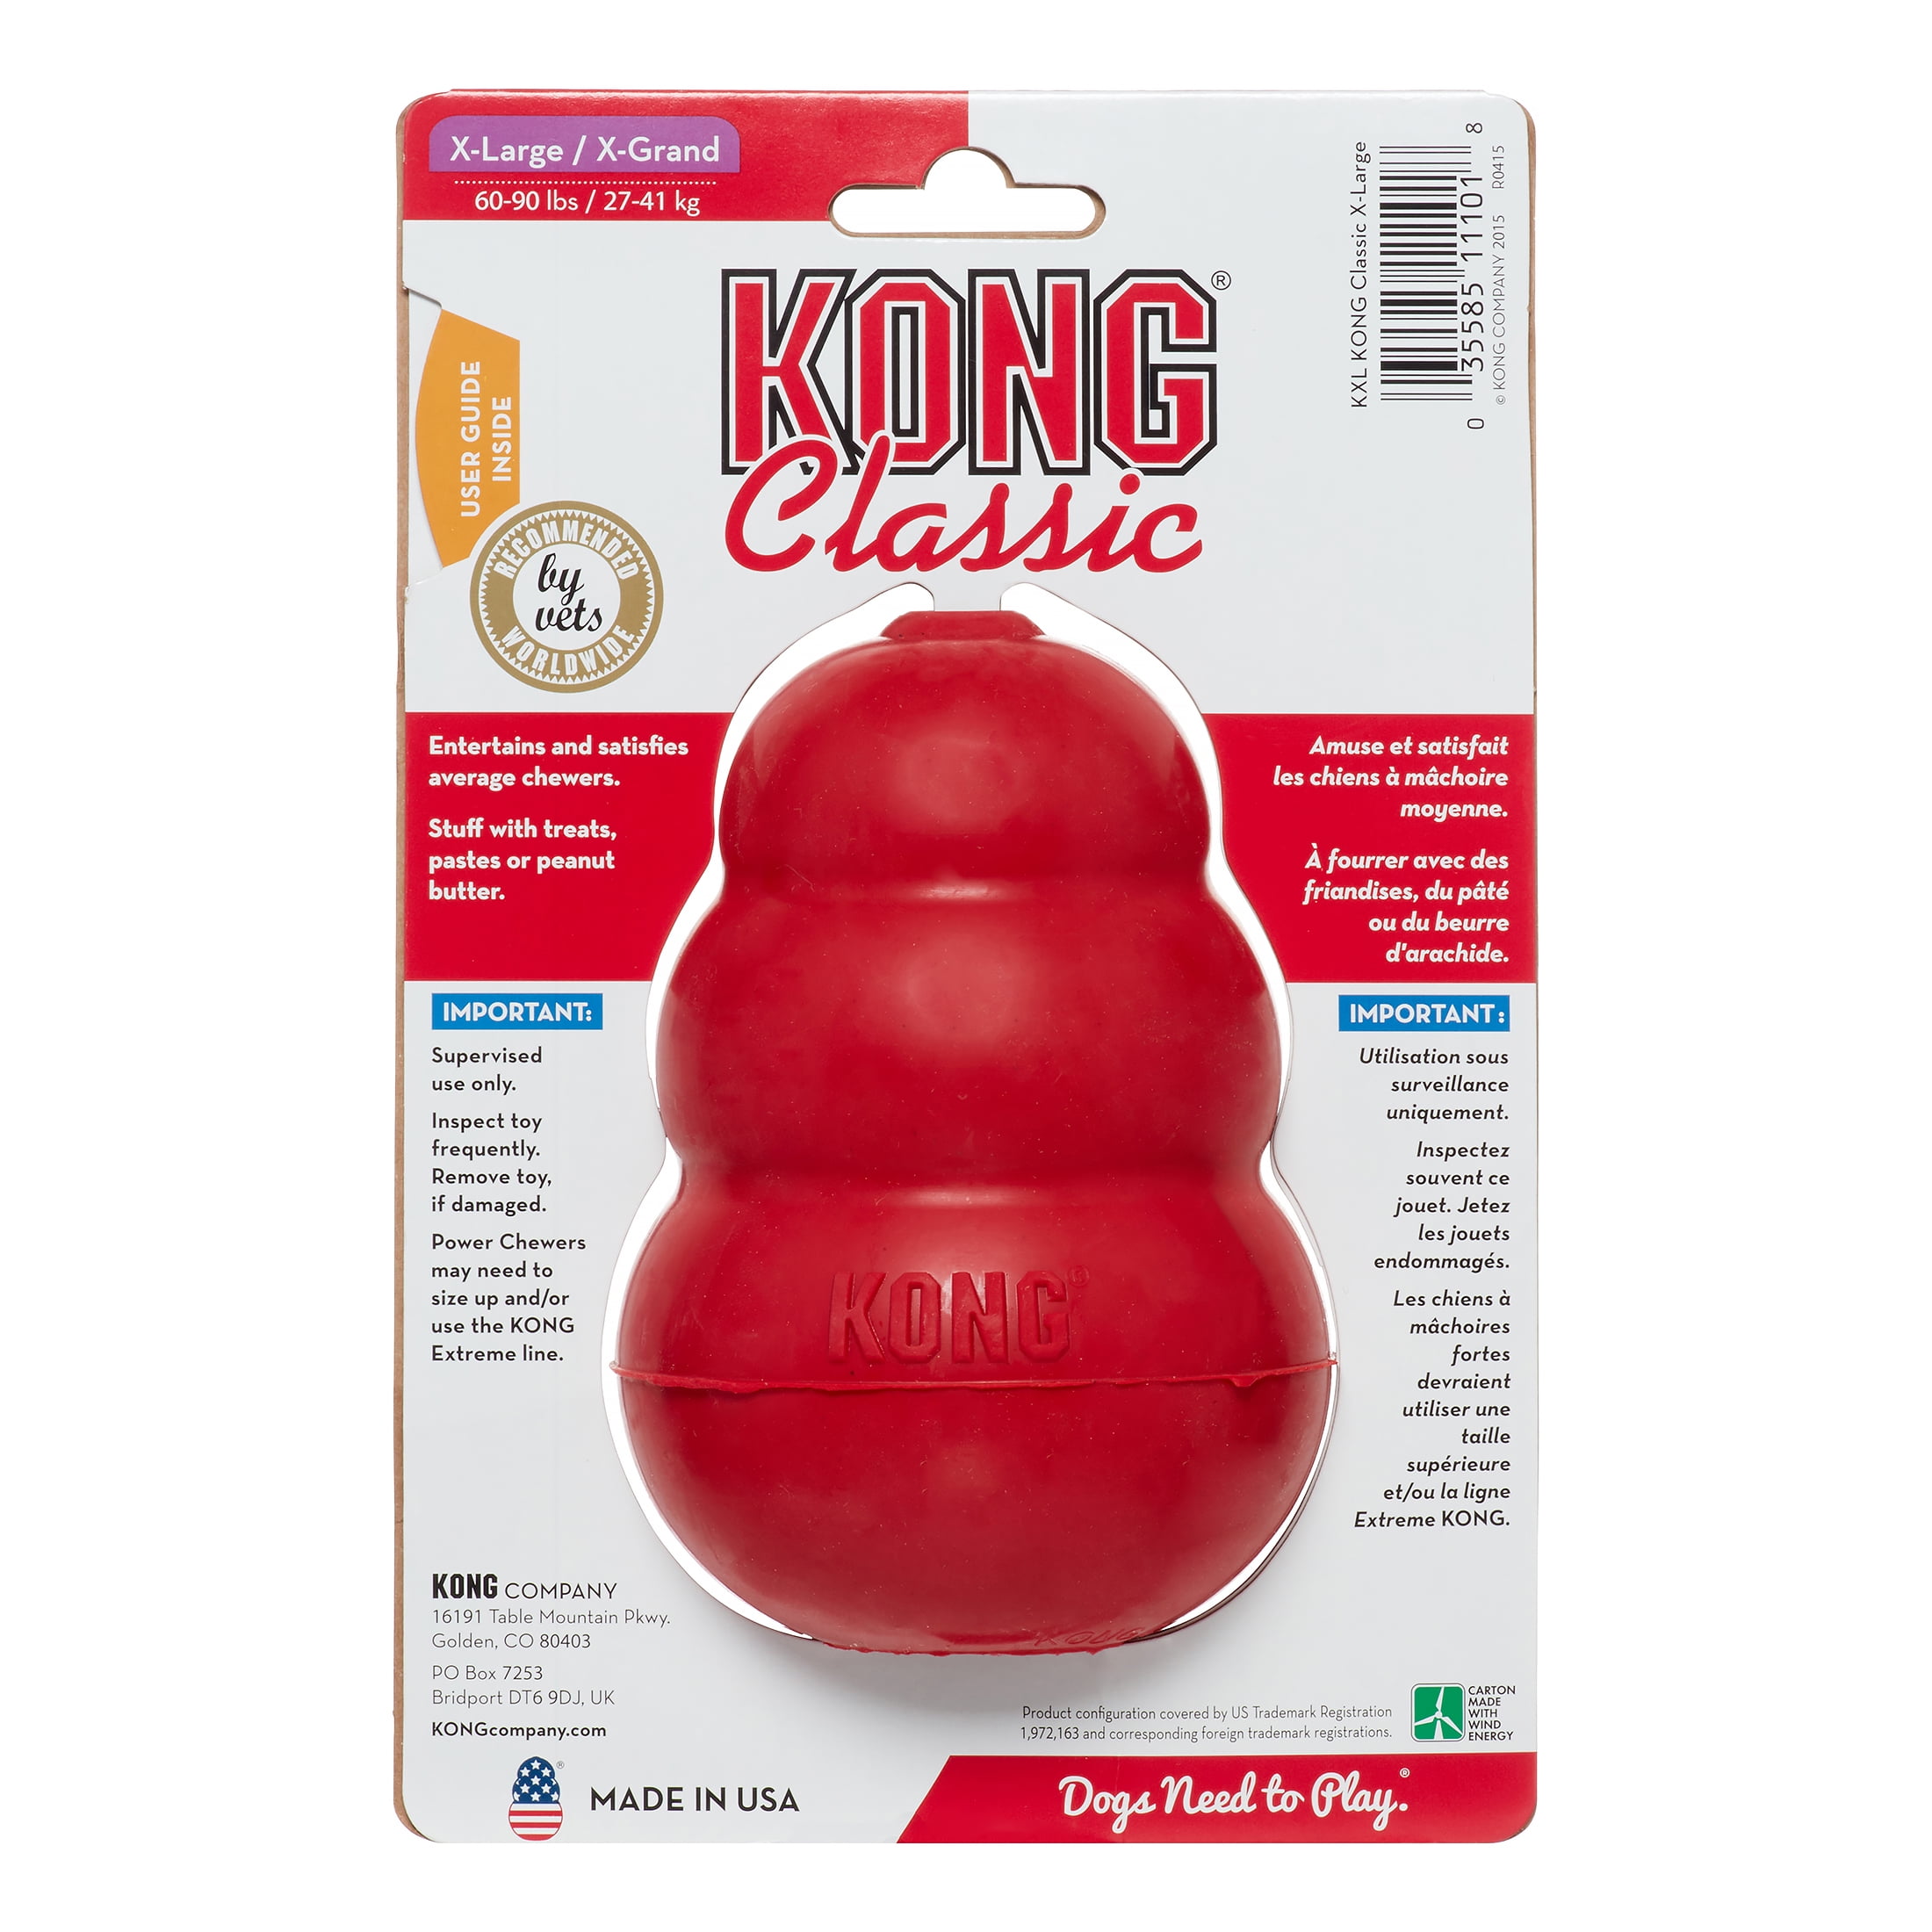 KONG Ziggies Adult Dog Treats, 8 oz.